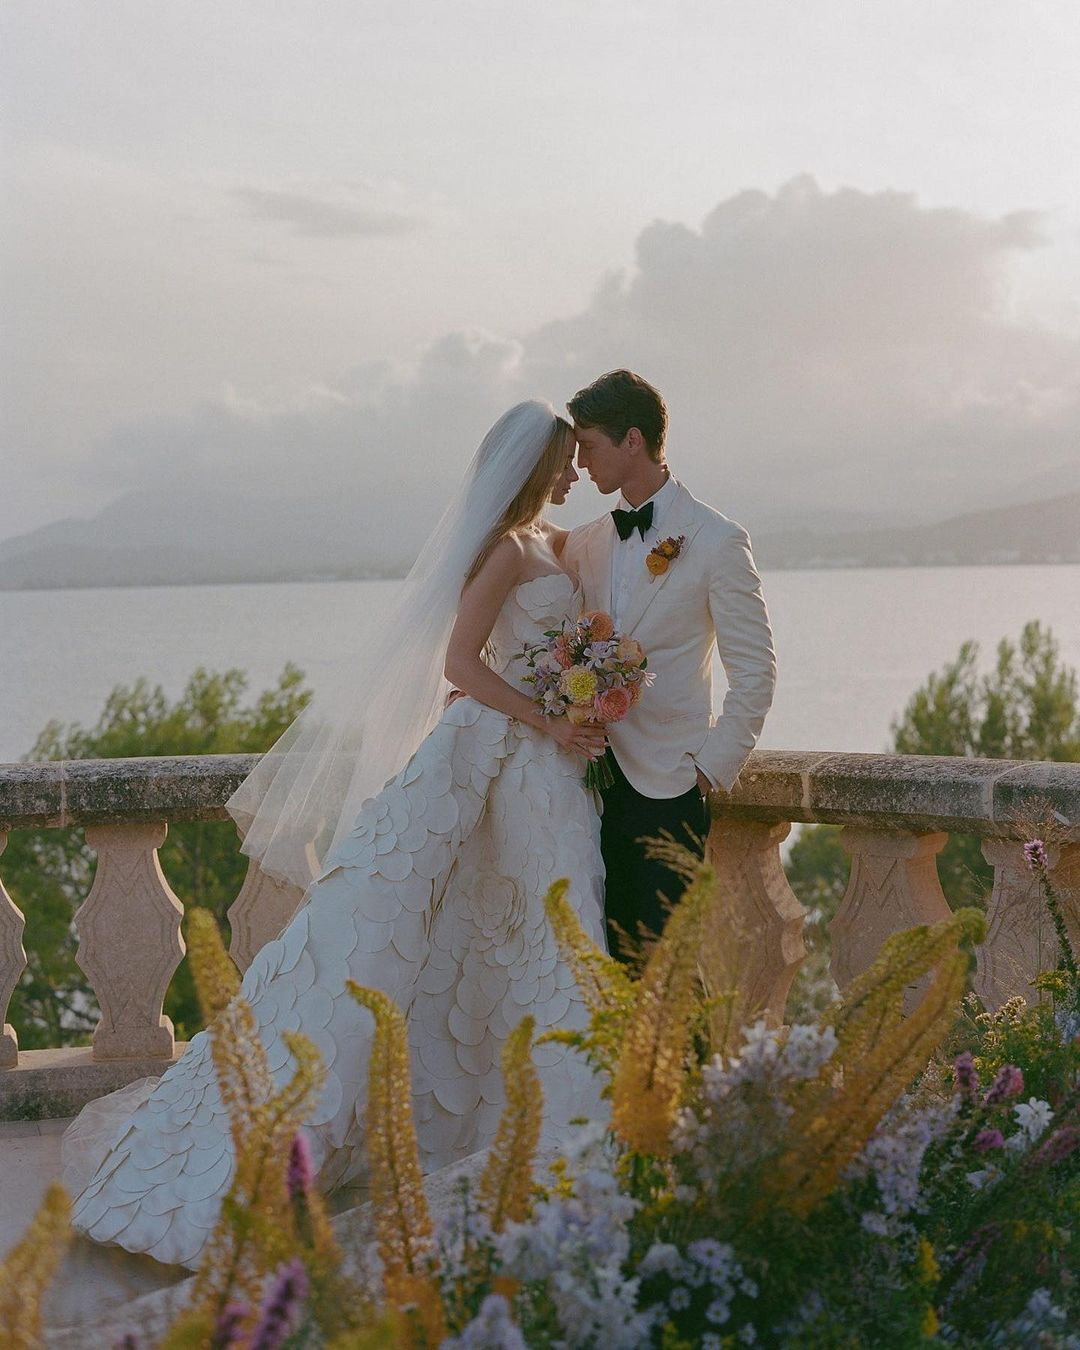 Anya Taylor-Joy Weds Malcom McRae In Beige Wedding Dress